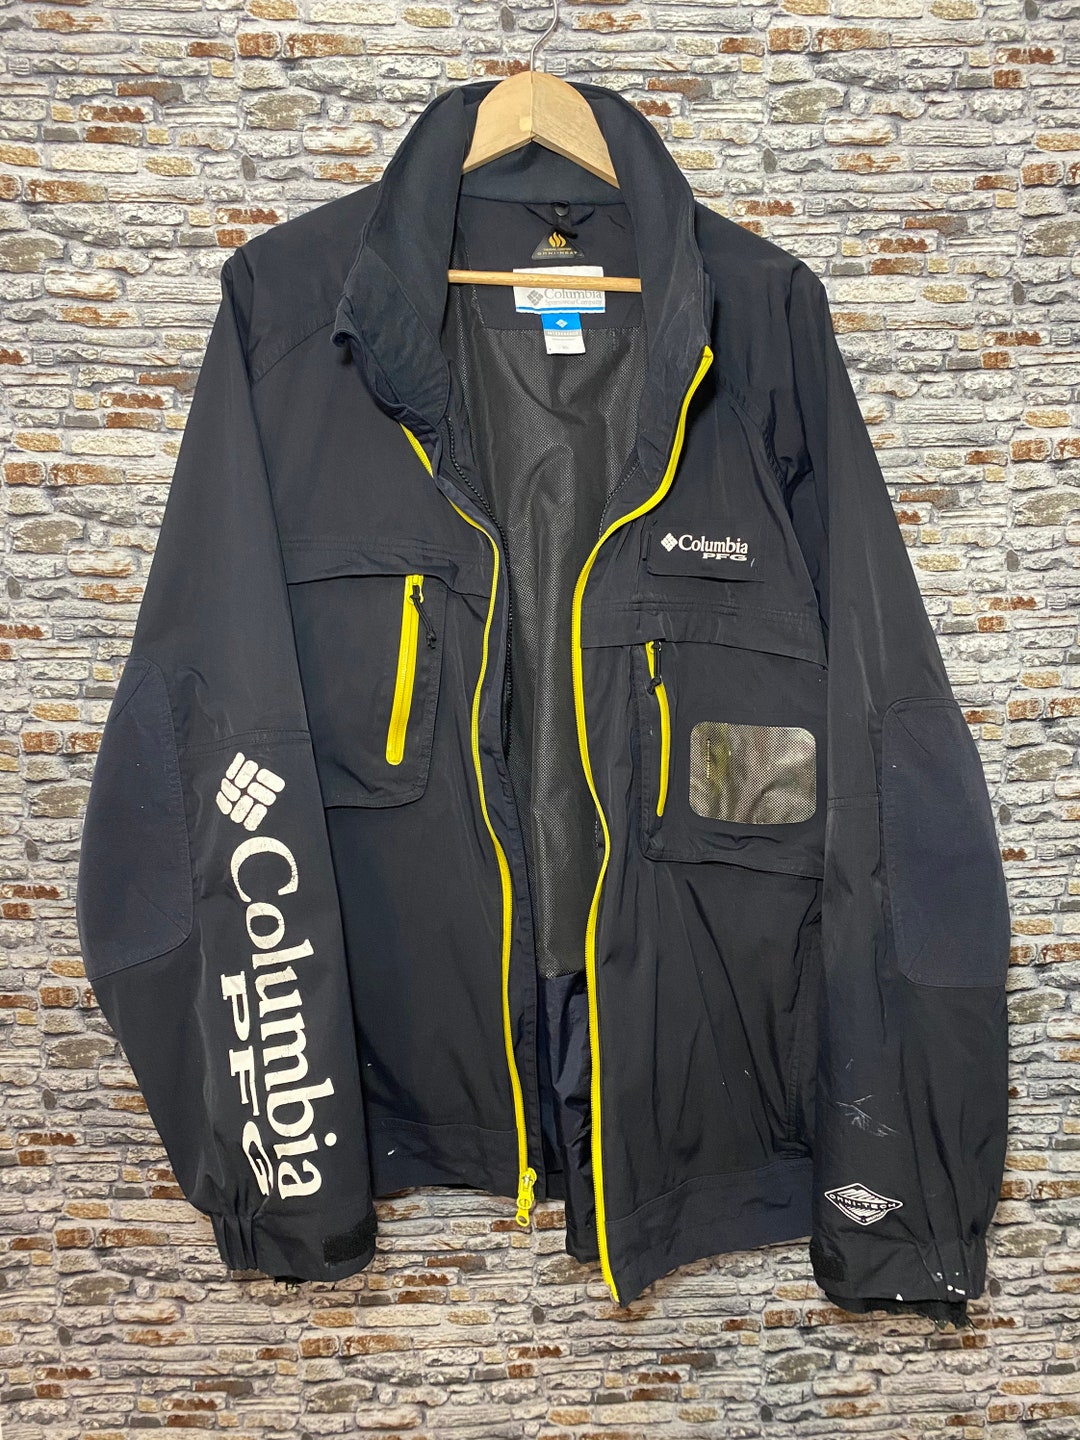 90s Colombia PFG fishing jacket 買取 比較 